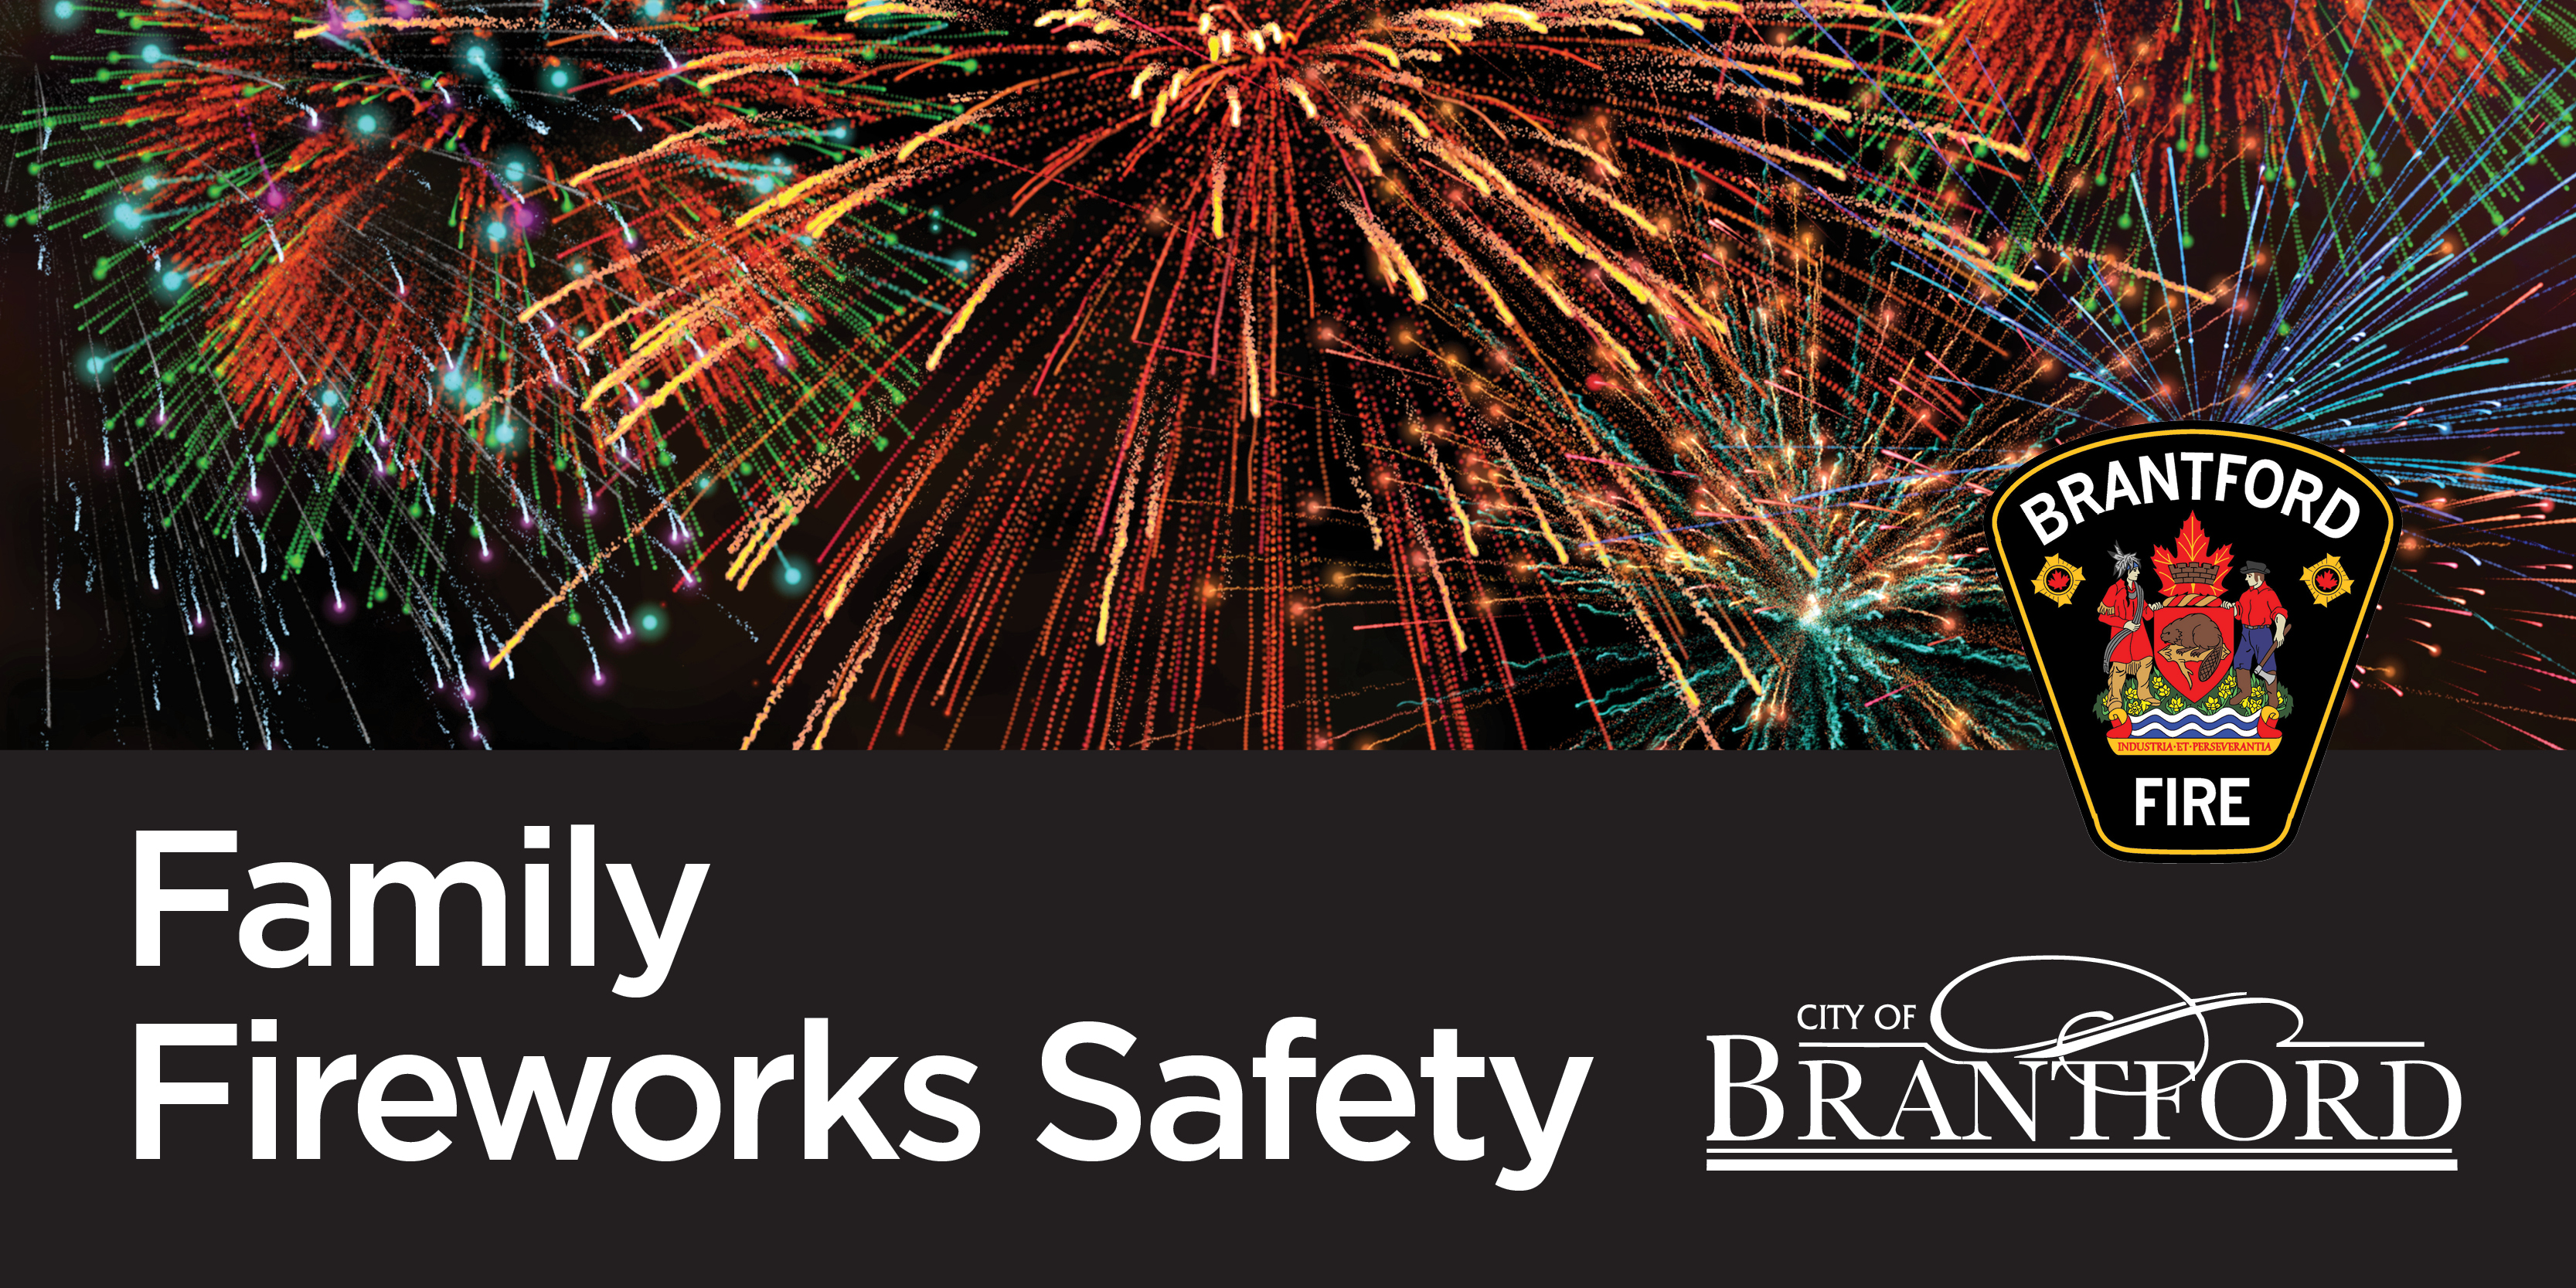 Fireworks safety tips for Brantford residents